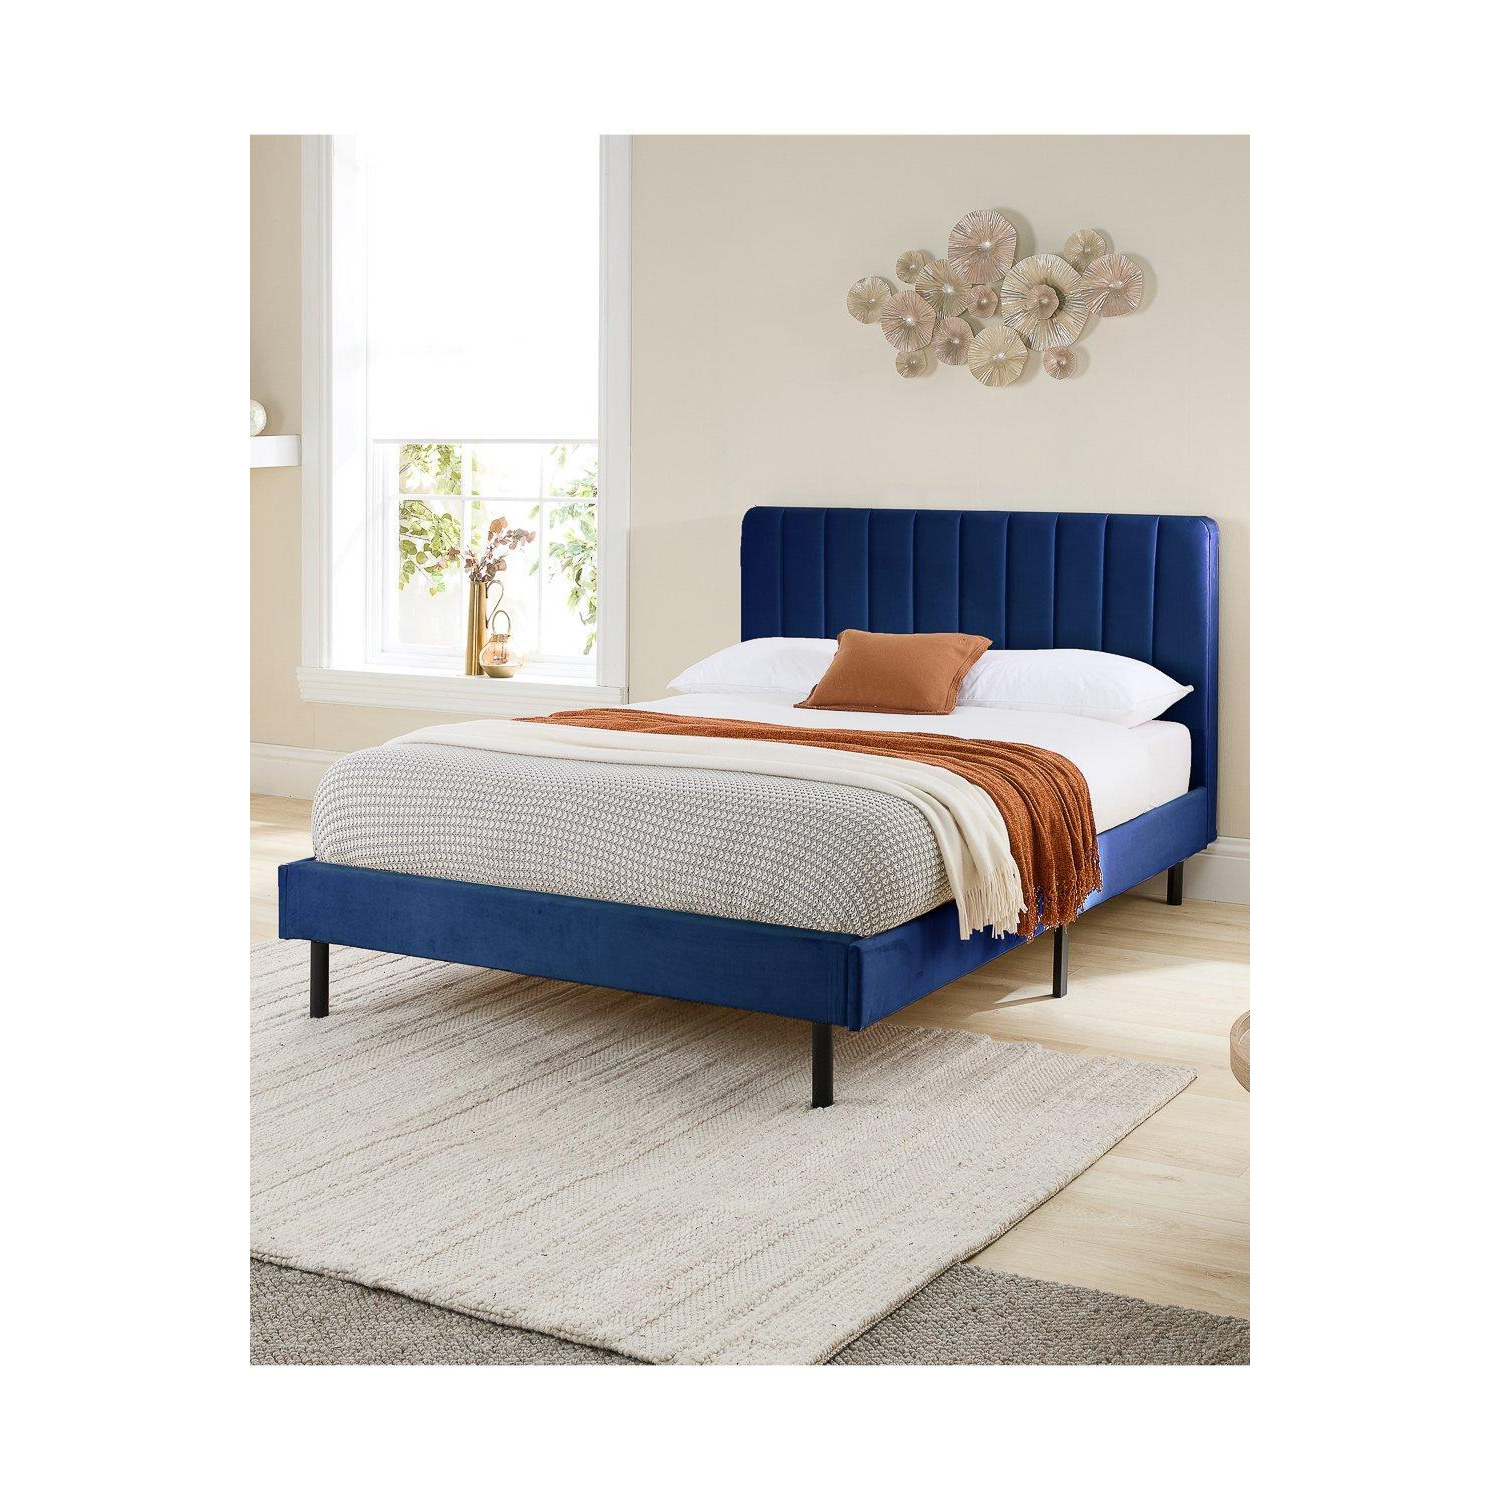 Rosella Upholstered Bed - image 1